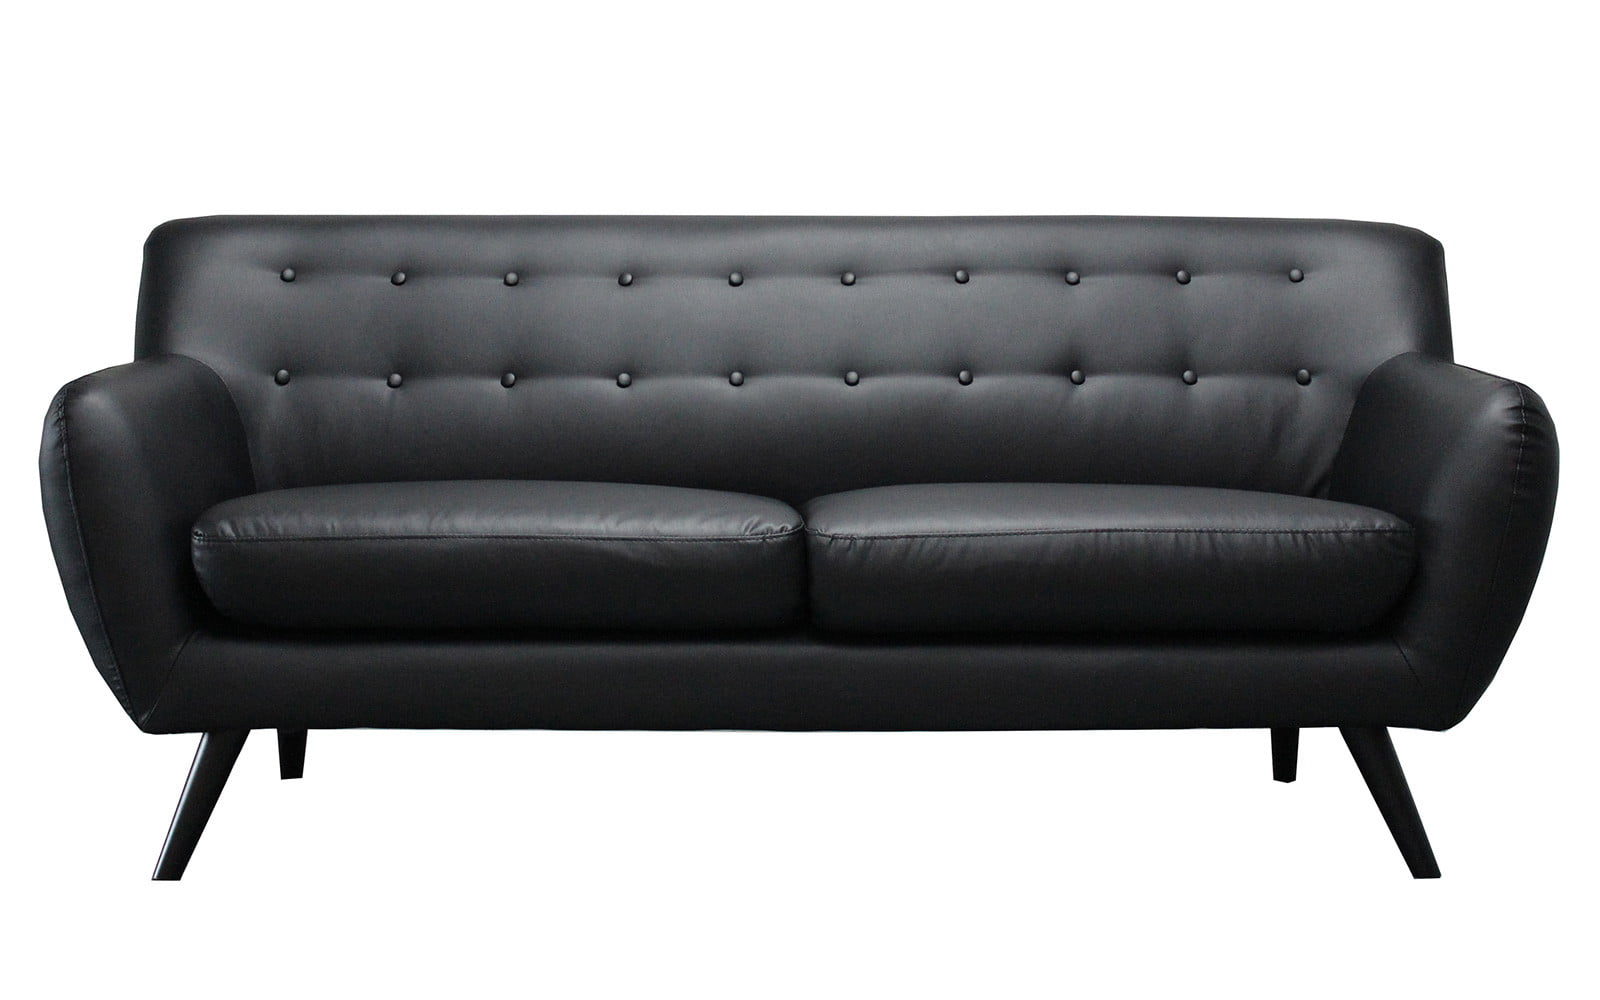 mid-century modern tufted leather sofa